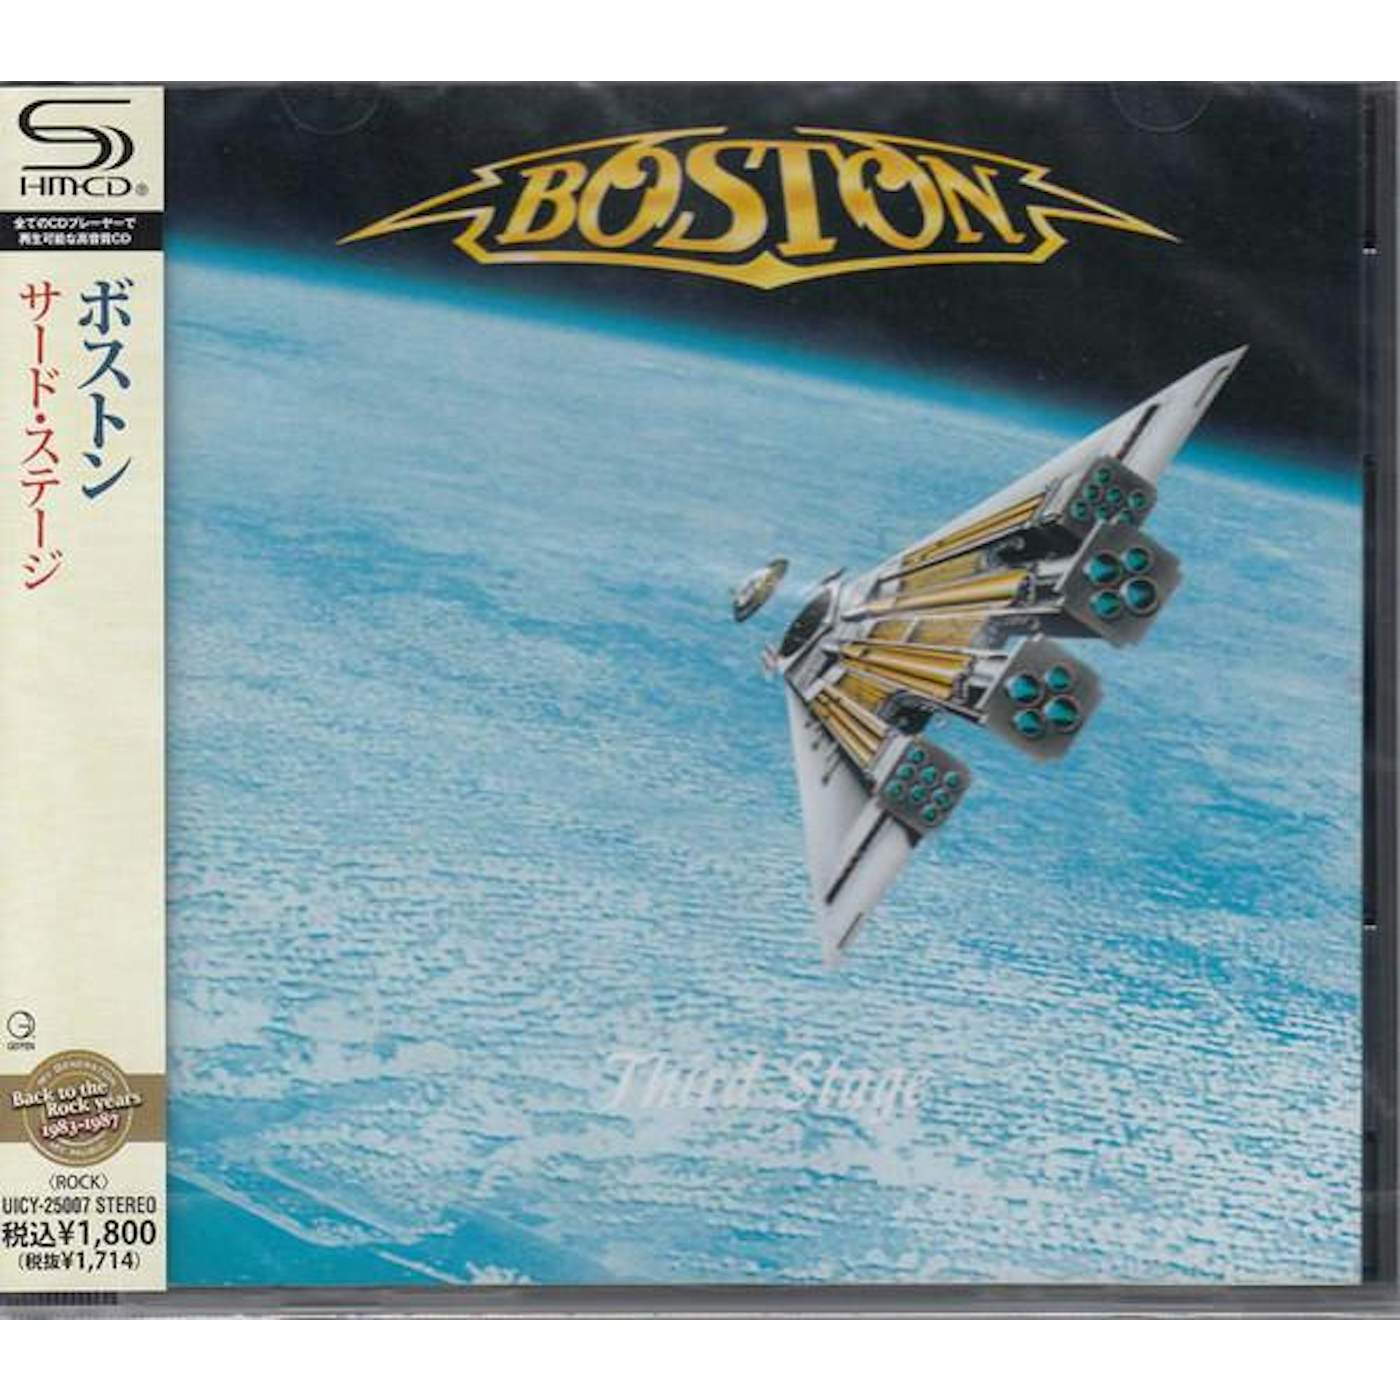 Boston THIRD STAGE CD